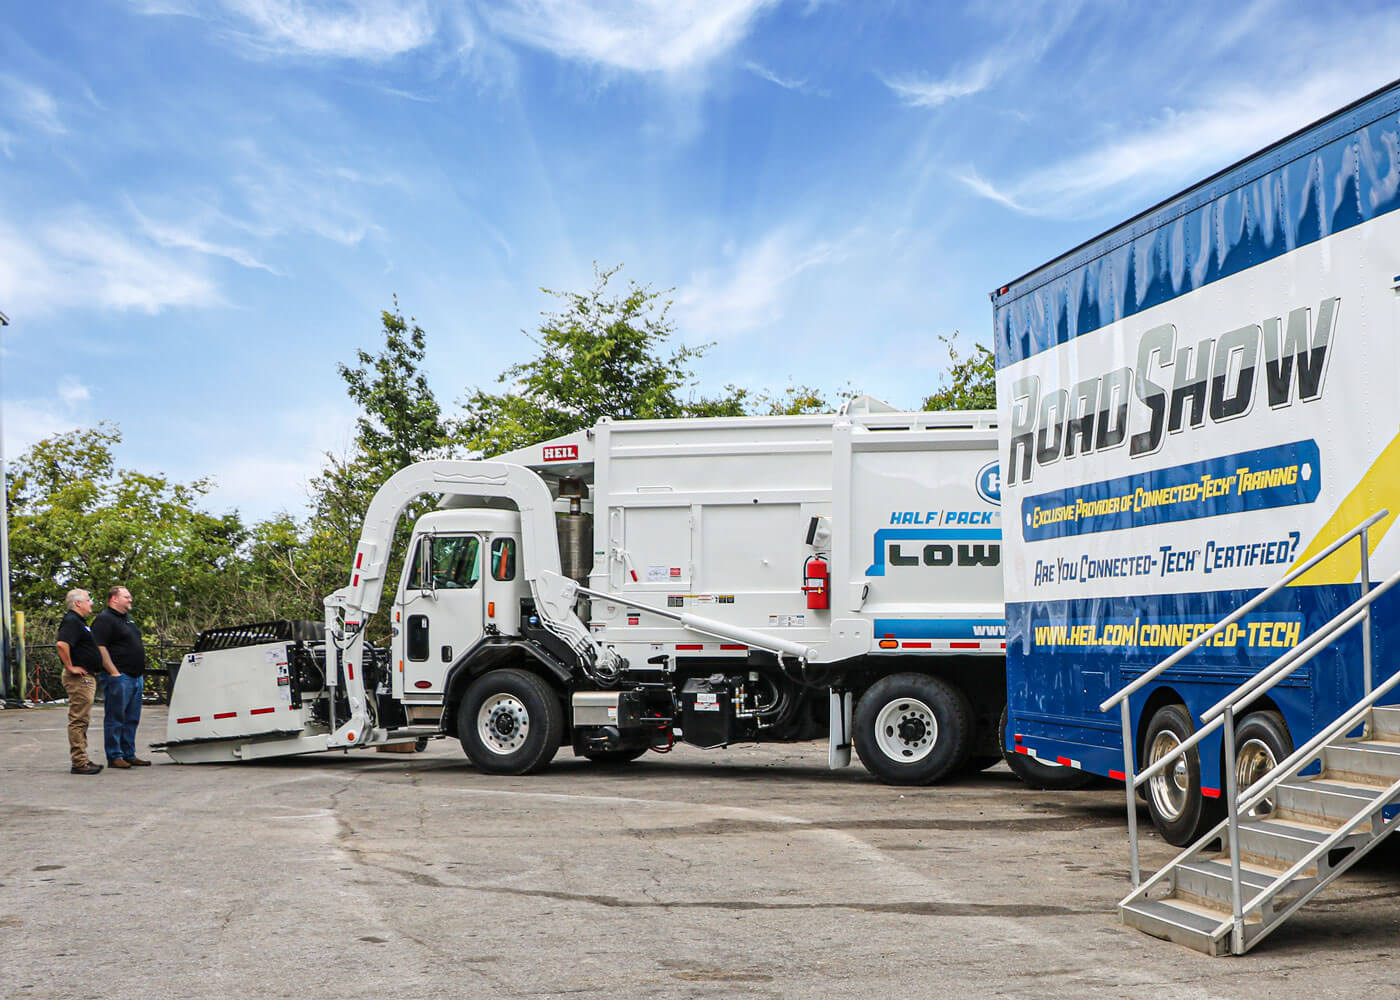 Heil garbage truck support training through tech services support team